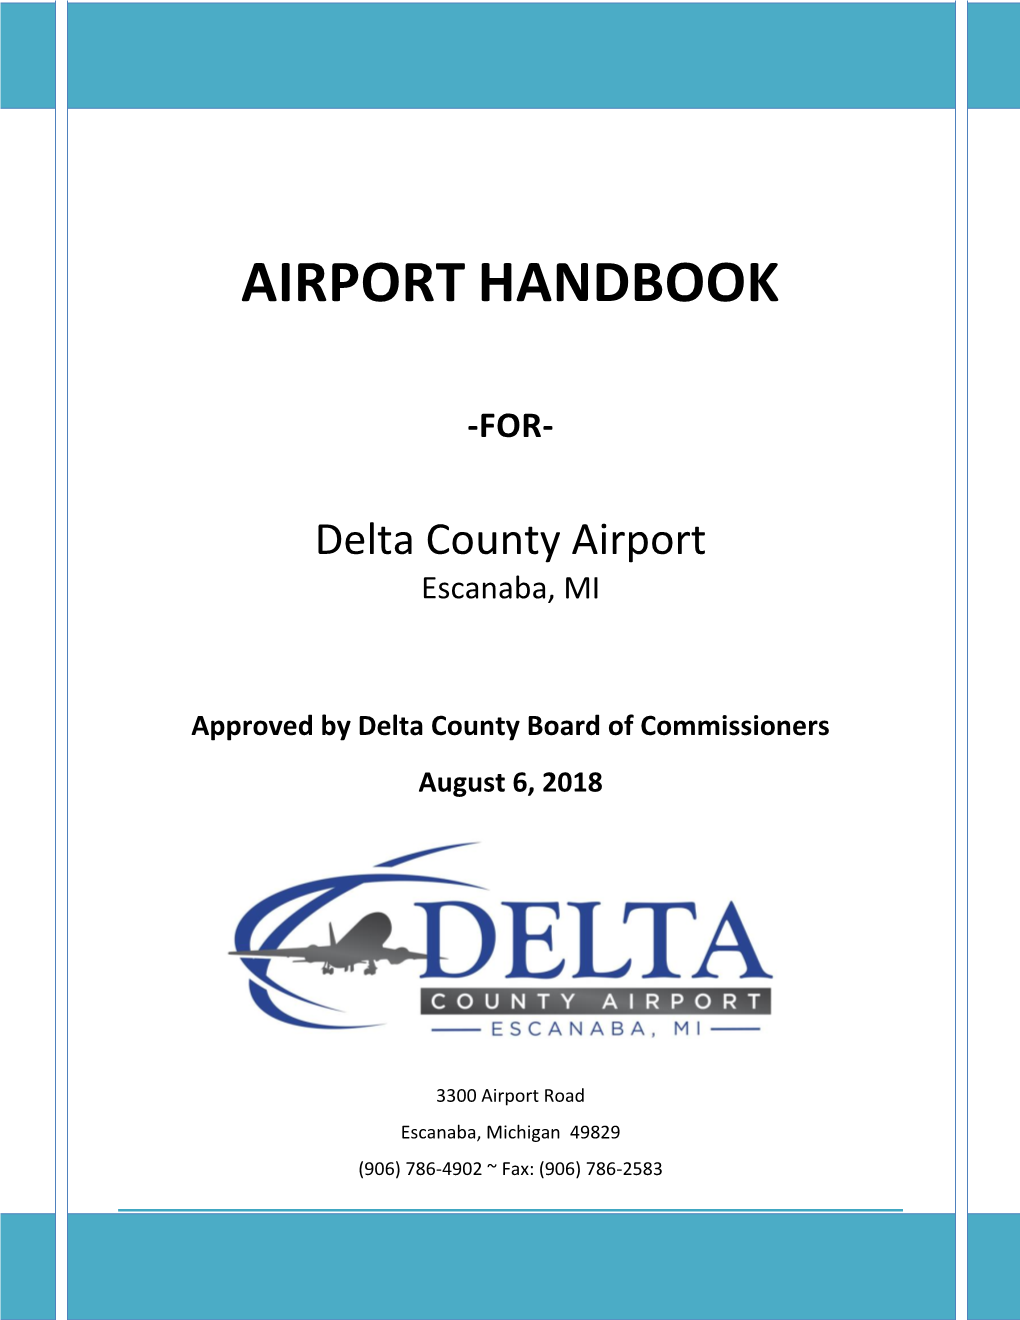 View Delta County Airport Handbook